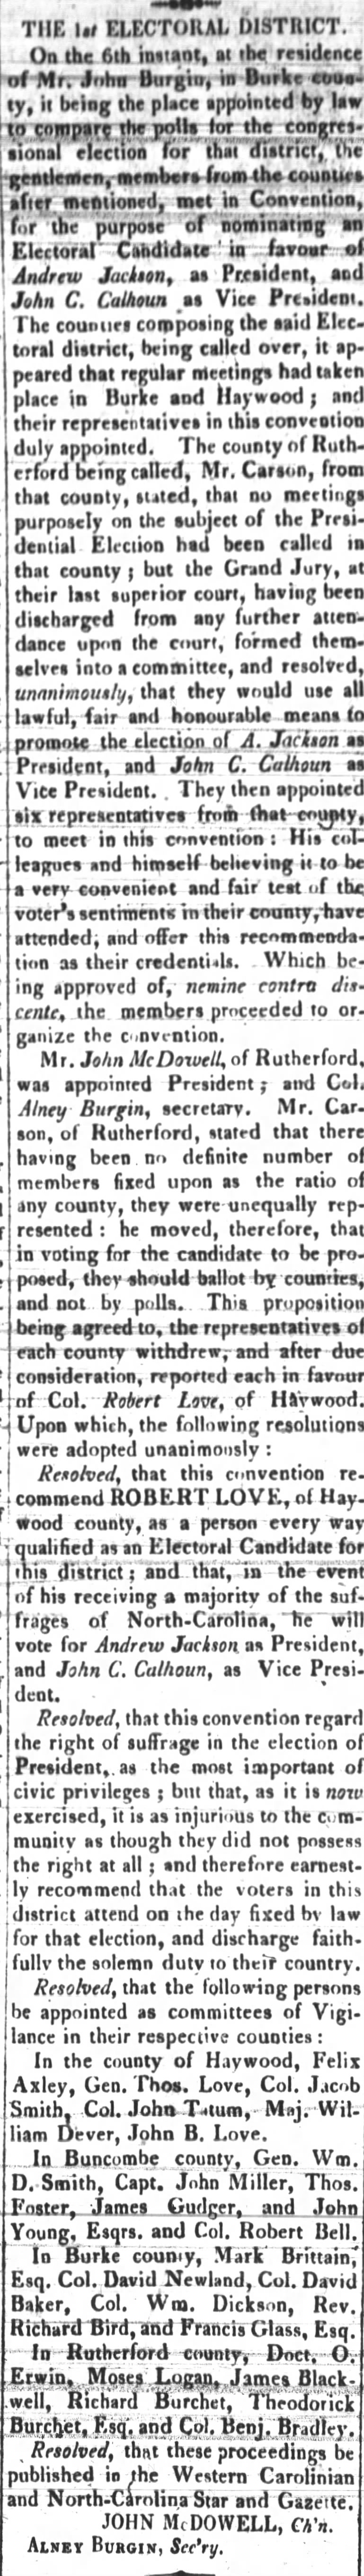 Electors for Jackson 1828